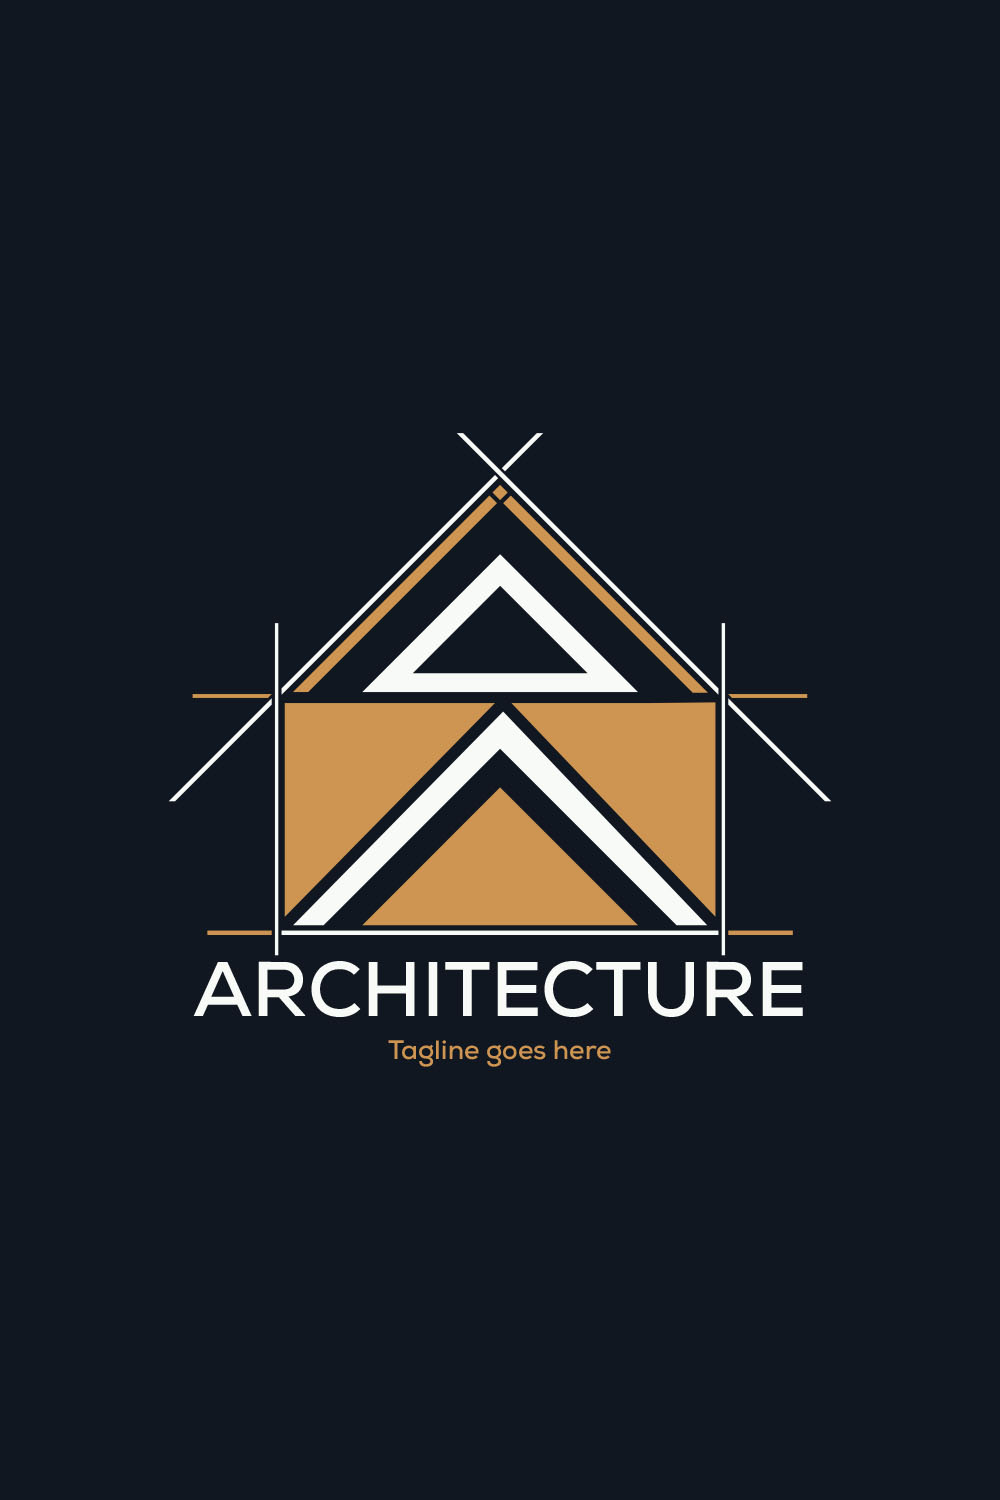 Creative Architecture House Logo Design pinterest image.